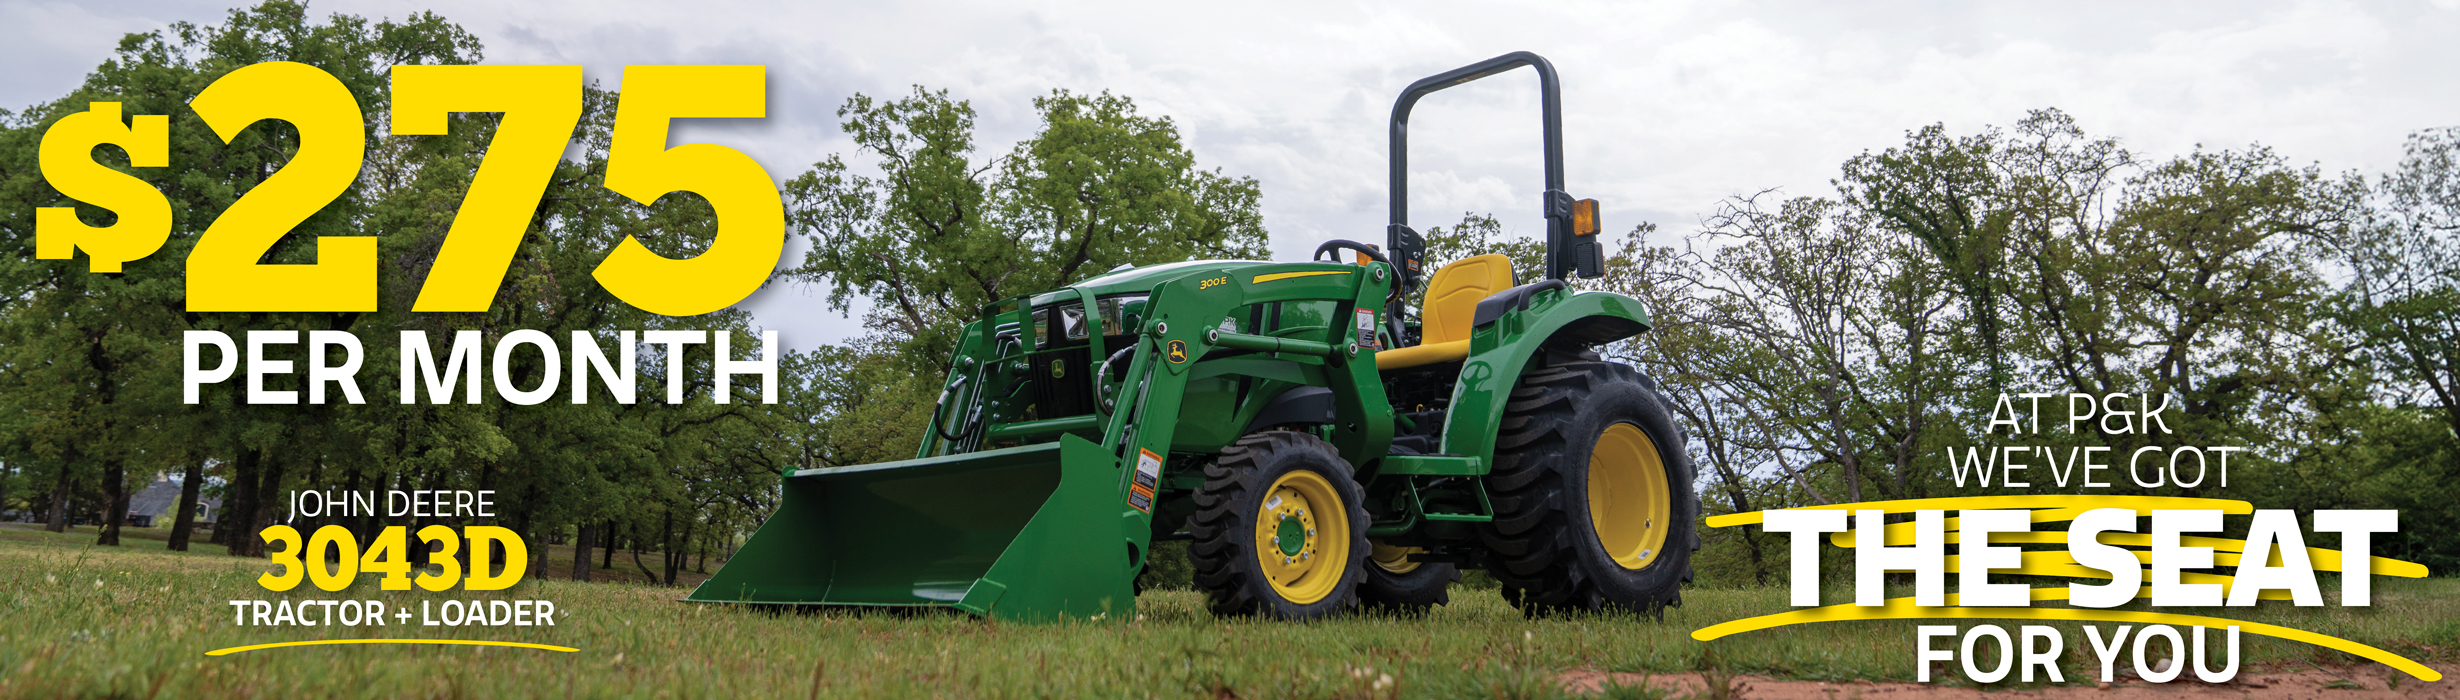 Get the John Deere 3043D Tractor + Loader for just $275 per month!